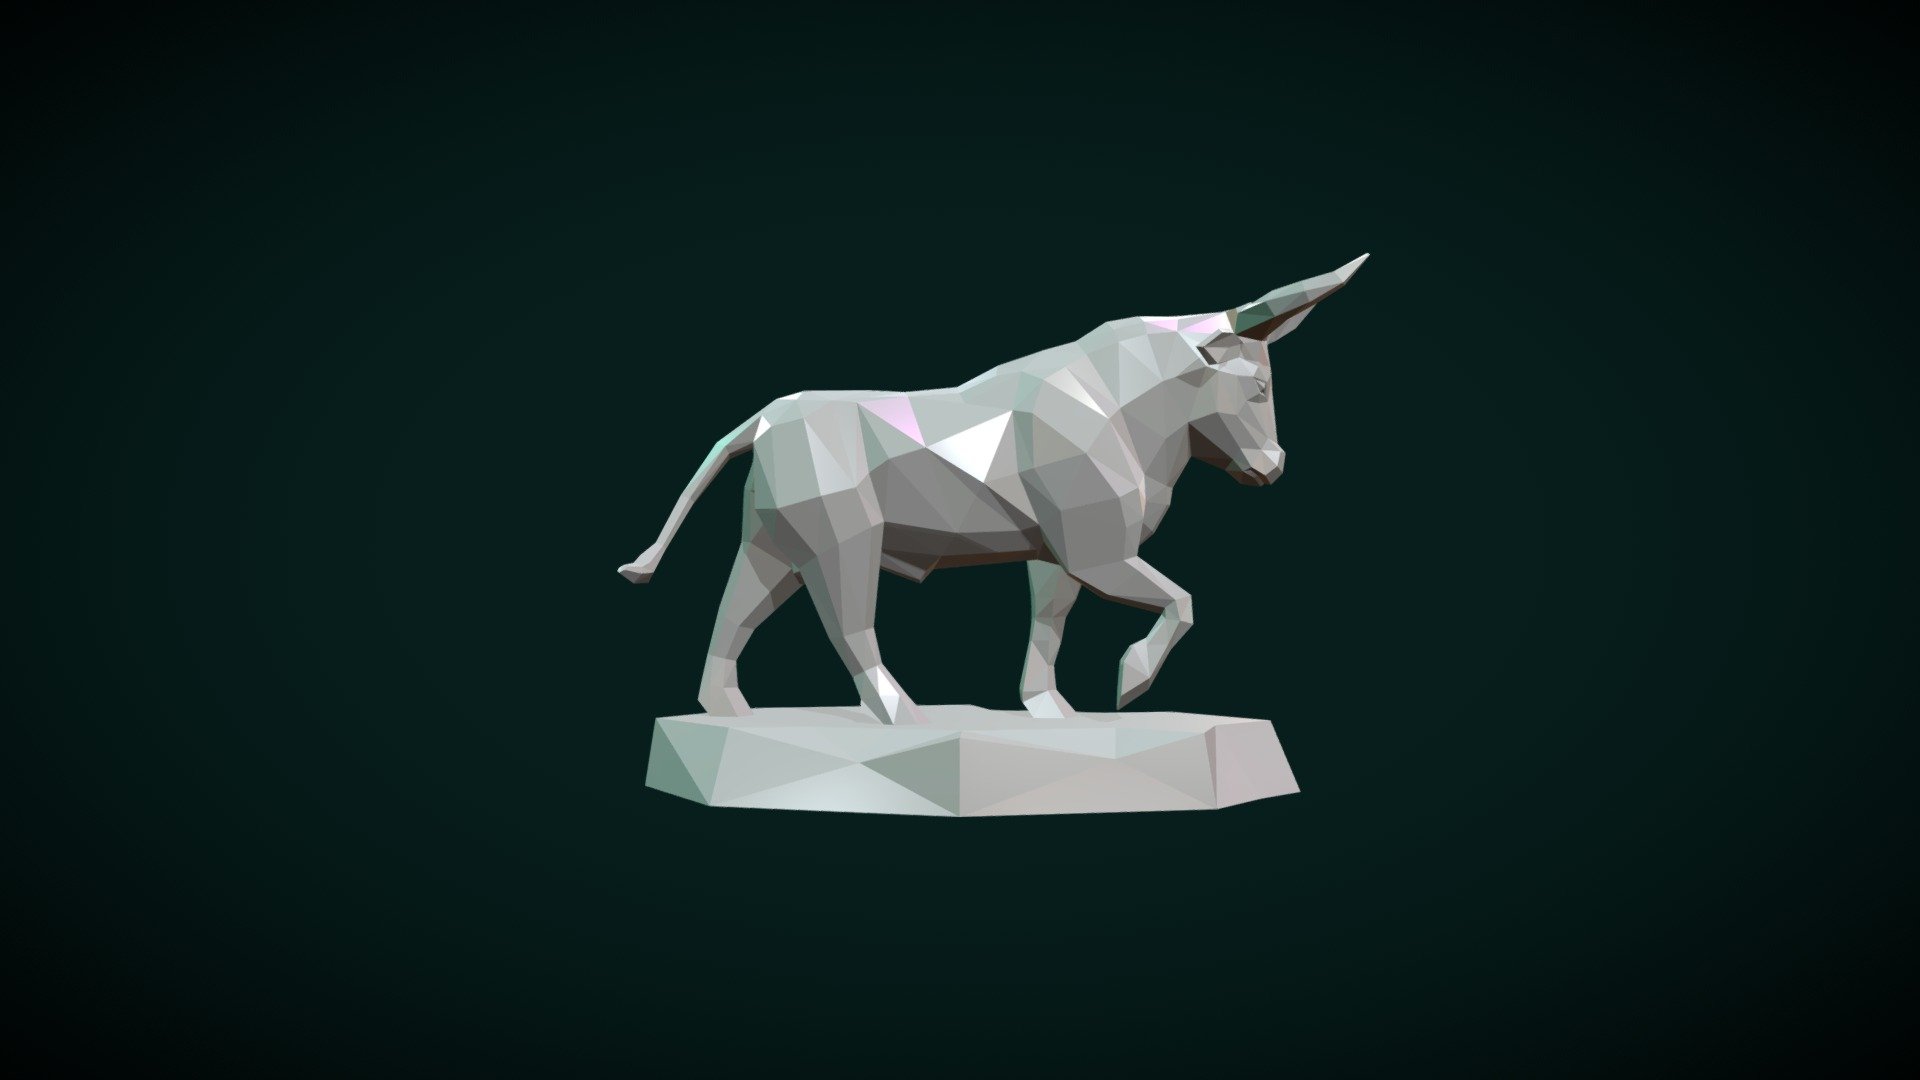 Bull sculpture